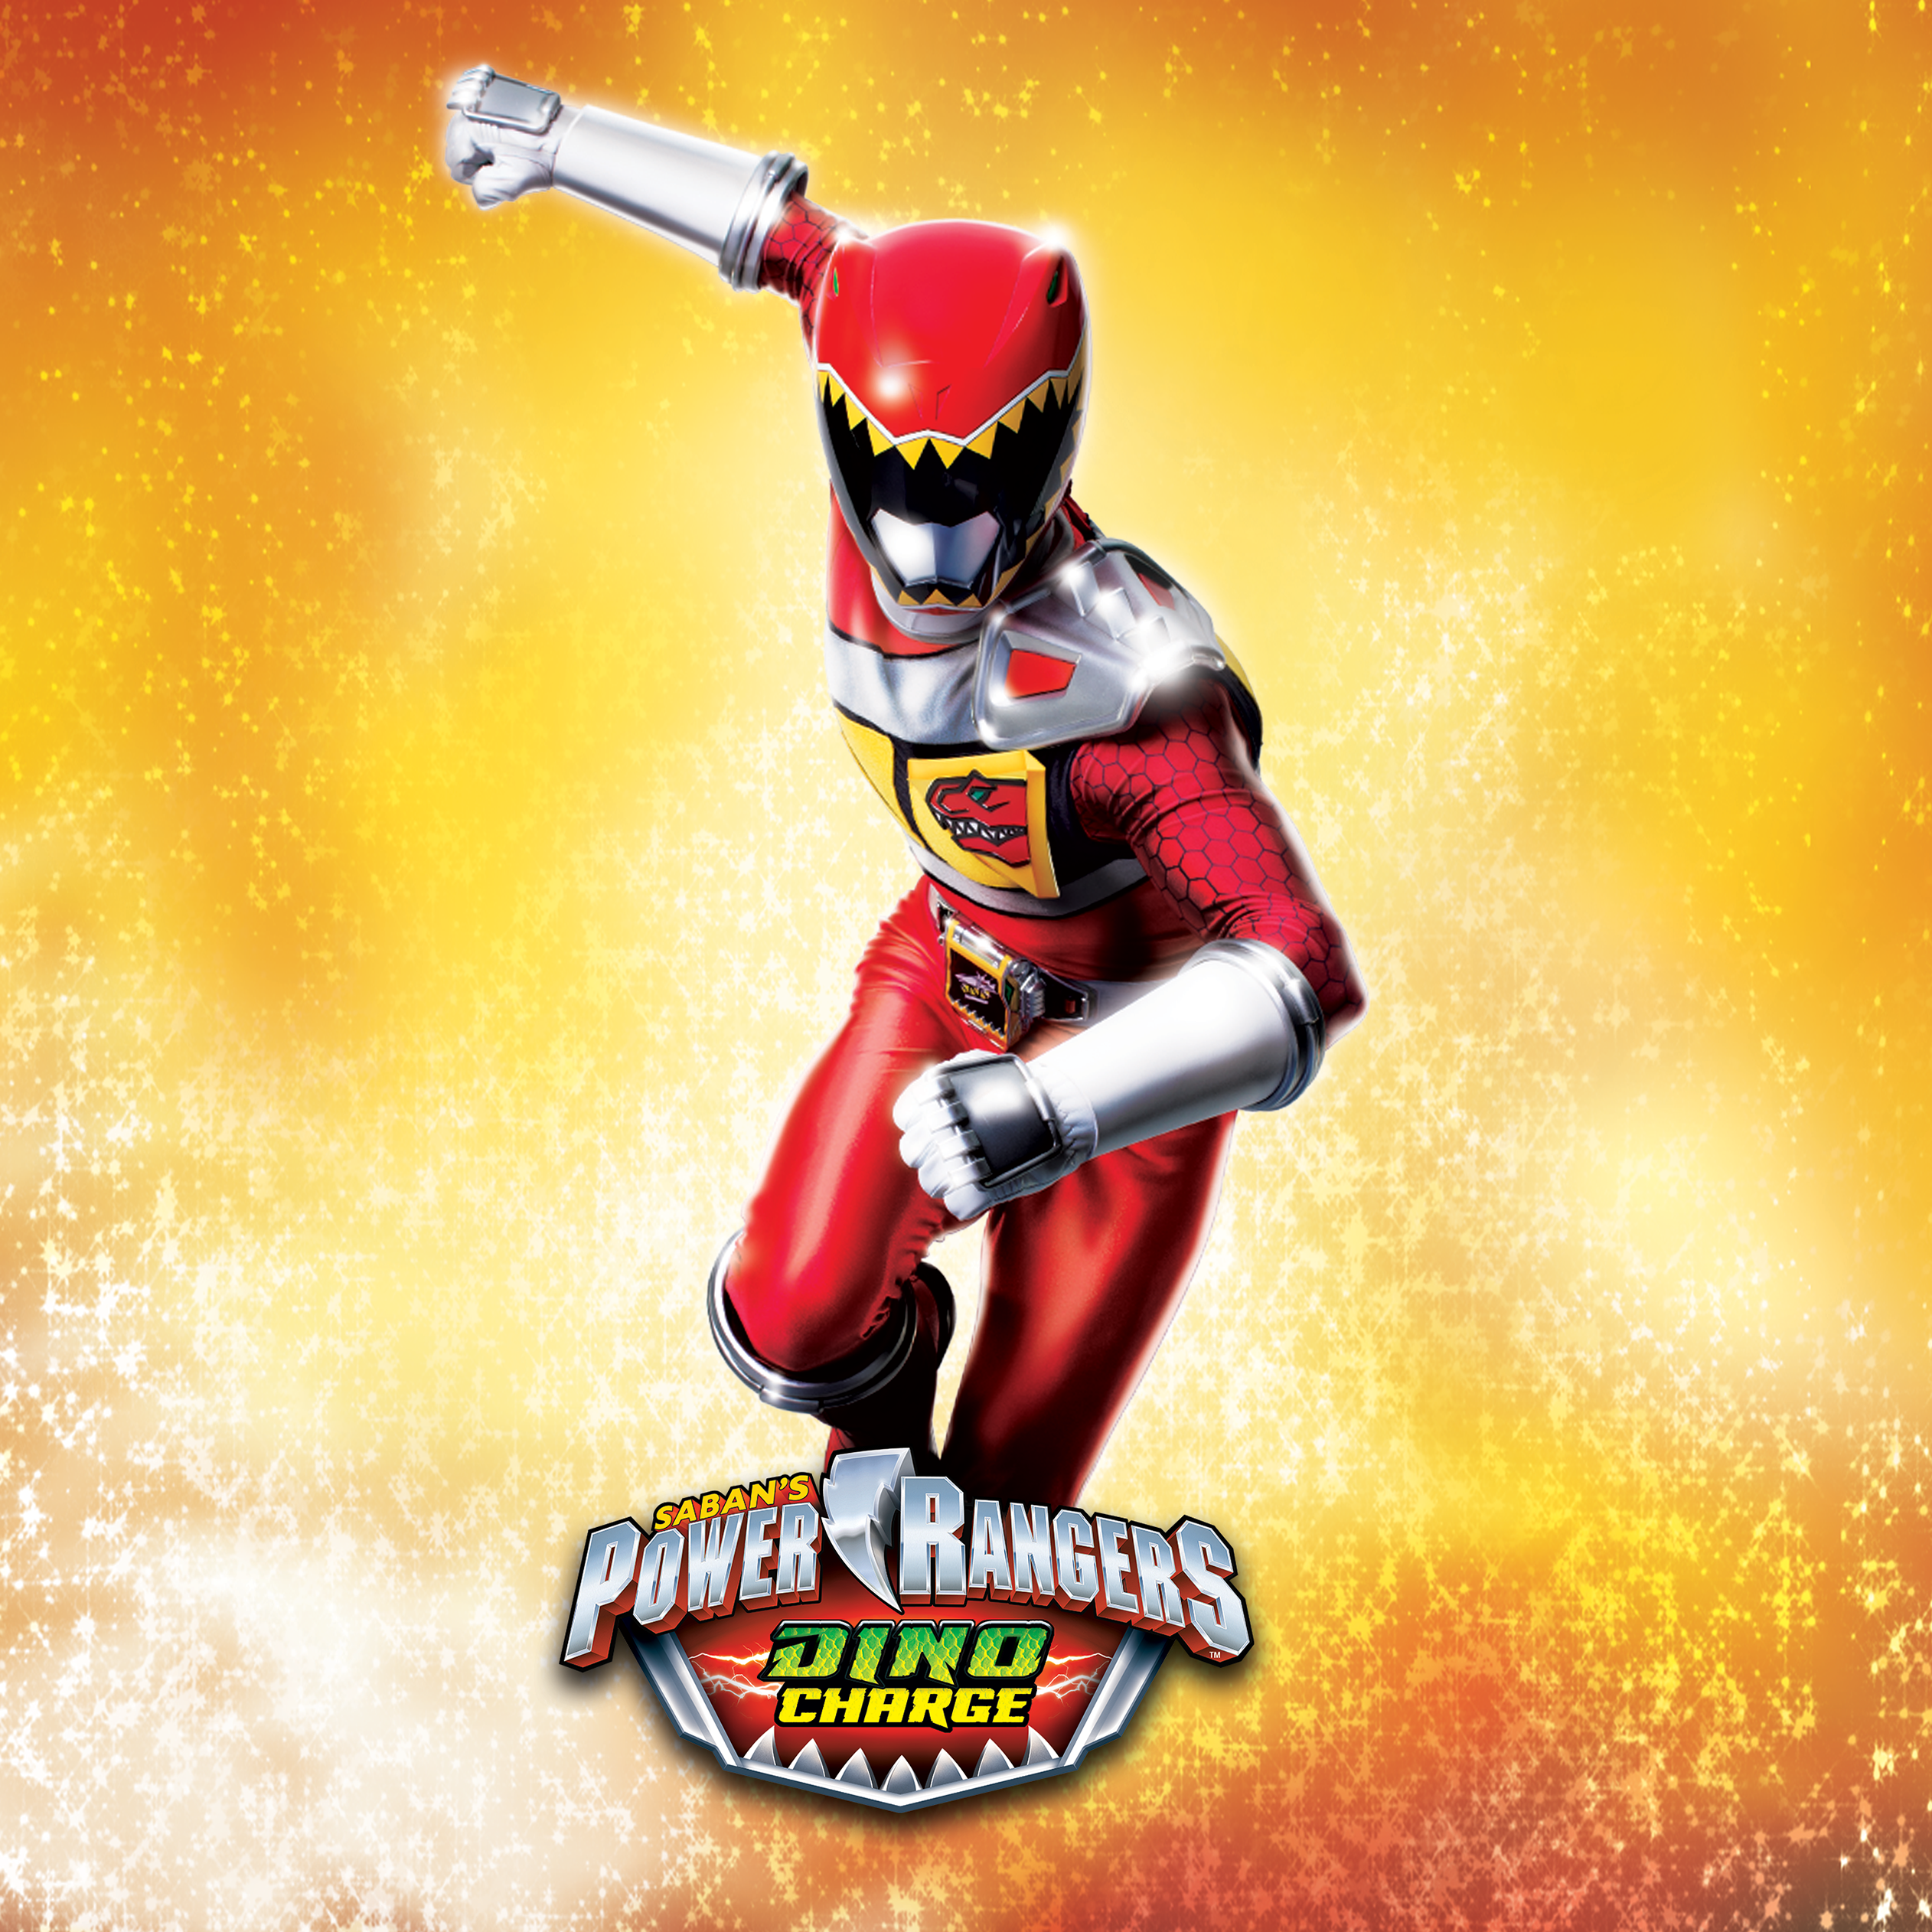 Ranger Wallpaper Power Rangers The Official Website